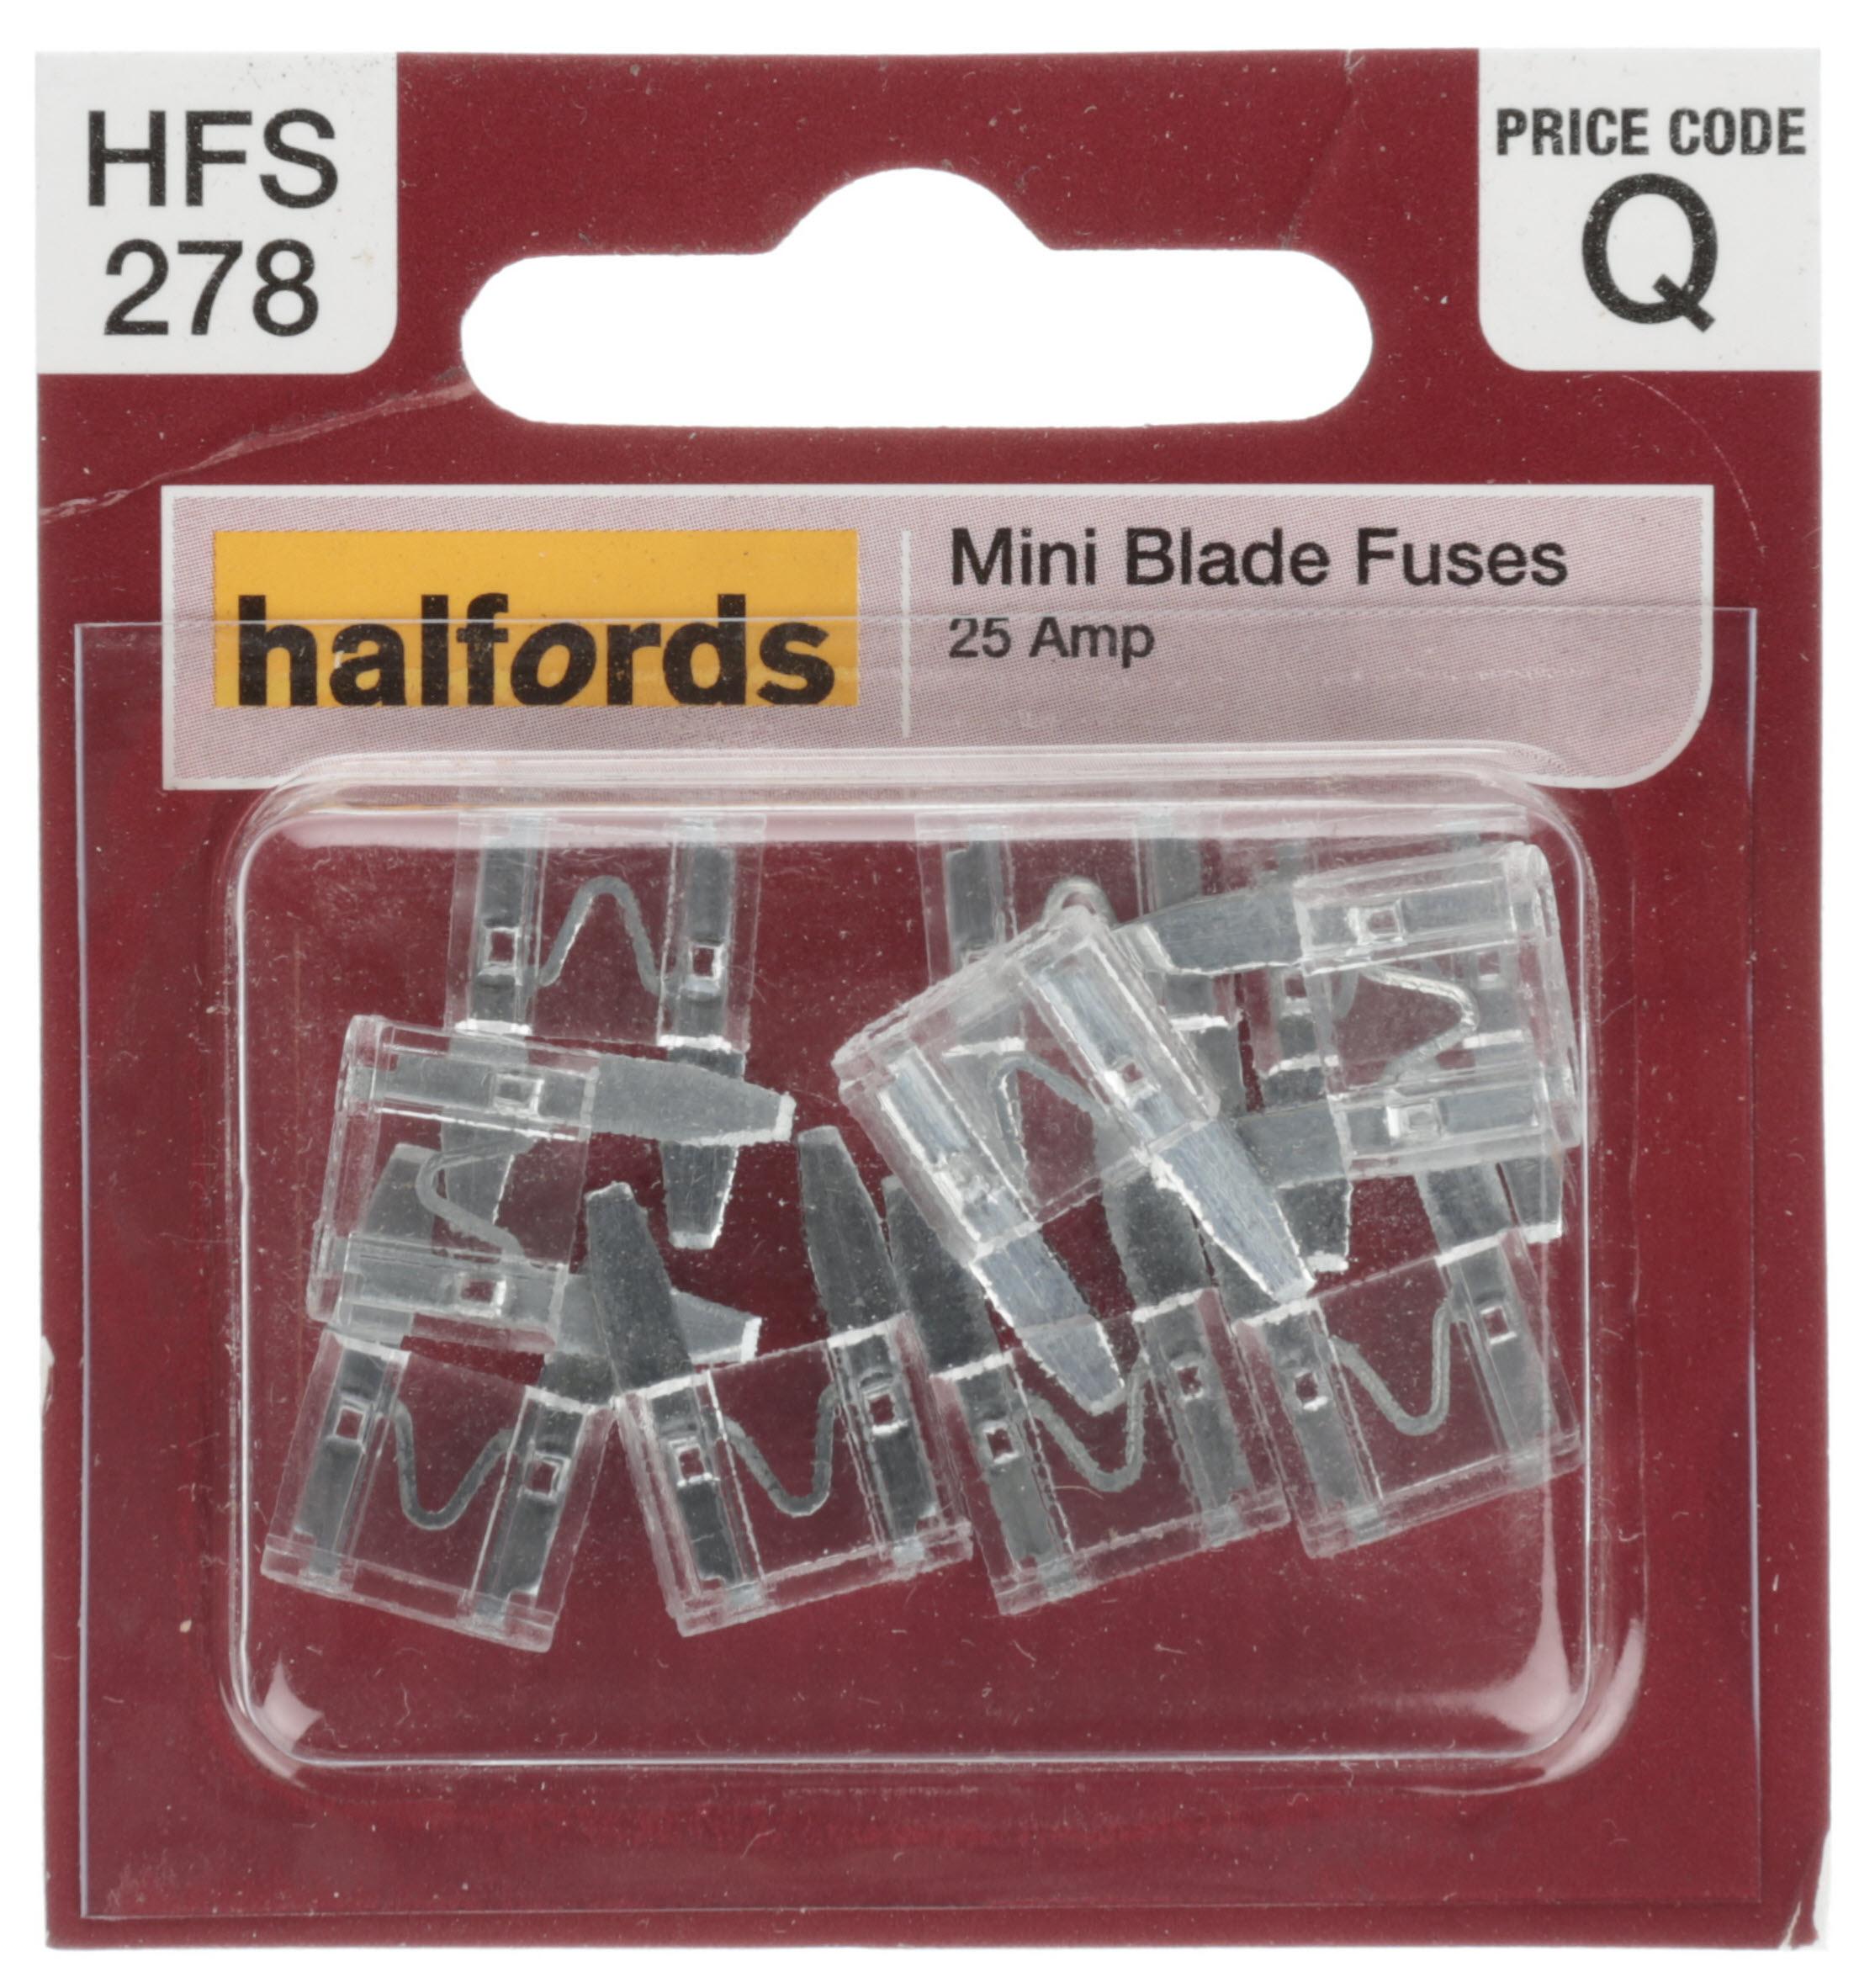 Halfords Mini Blade Fuse 25 Amp (Hfs278)